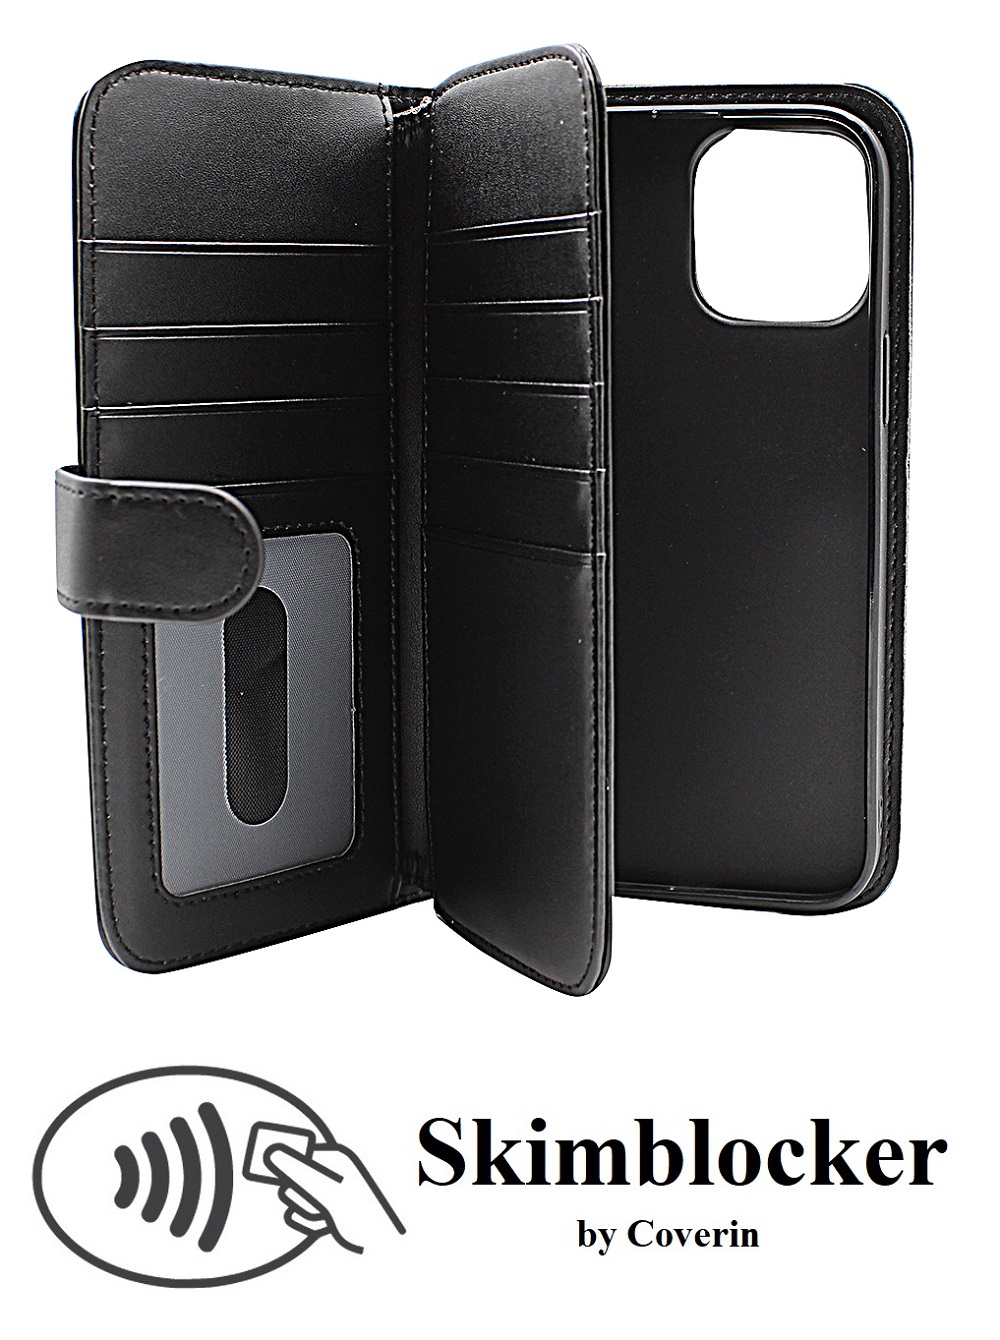 Skimblocker XL Wallet iPhone 13 Pro Max (6.7)